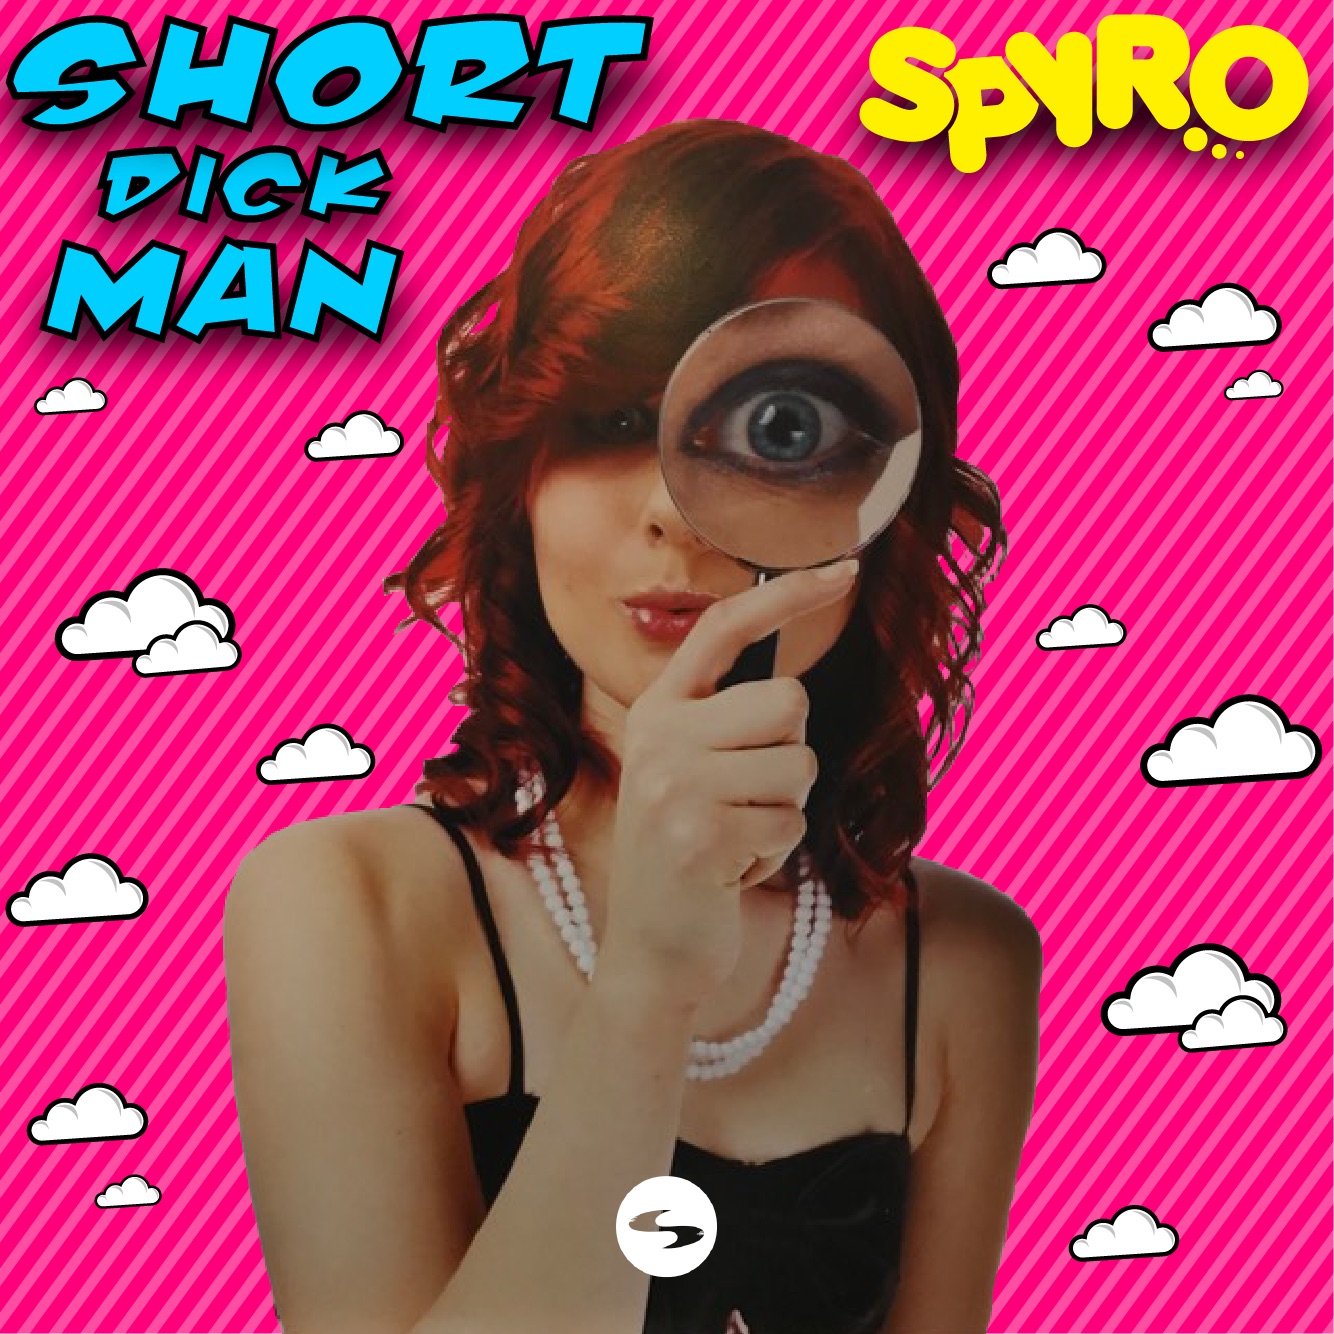 Download SPYRO - Short Dick Man